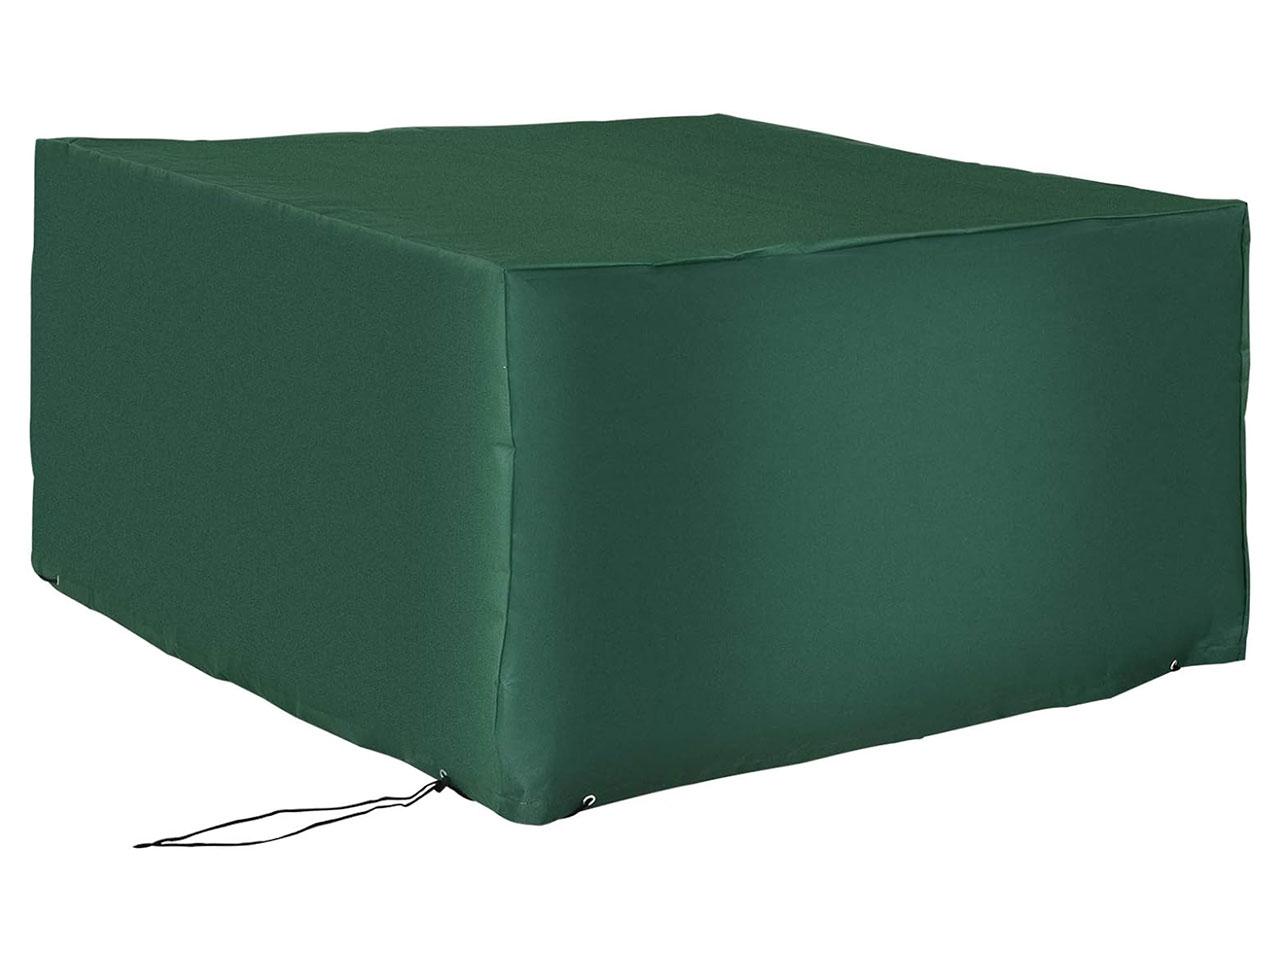 Ochranný kryt na zahradní nábytek 02-0178, oxford, zelený, 135 x 135 x 75 cm